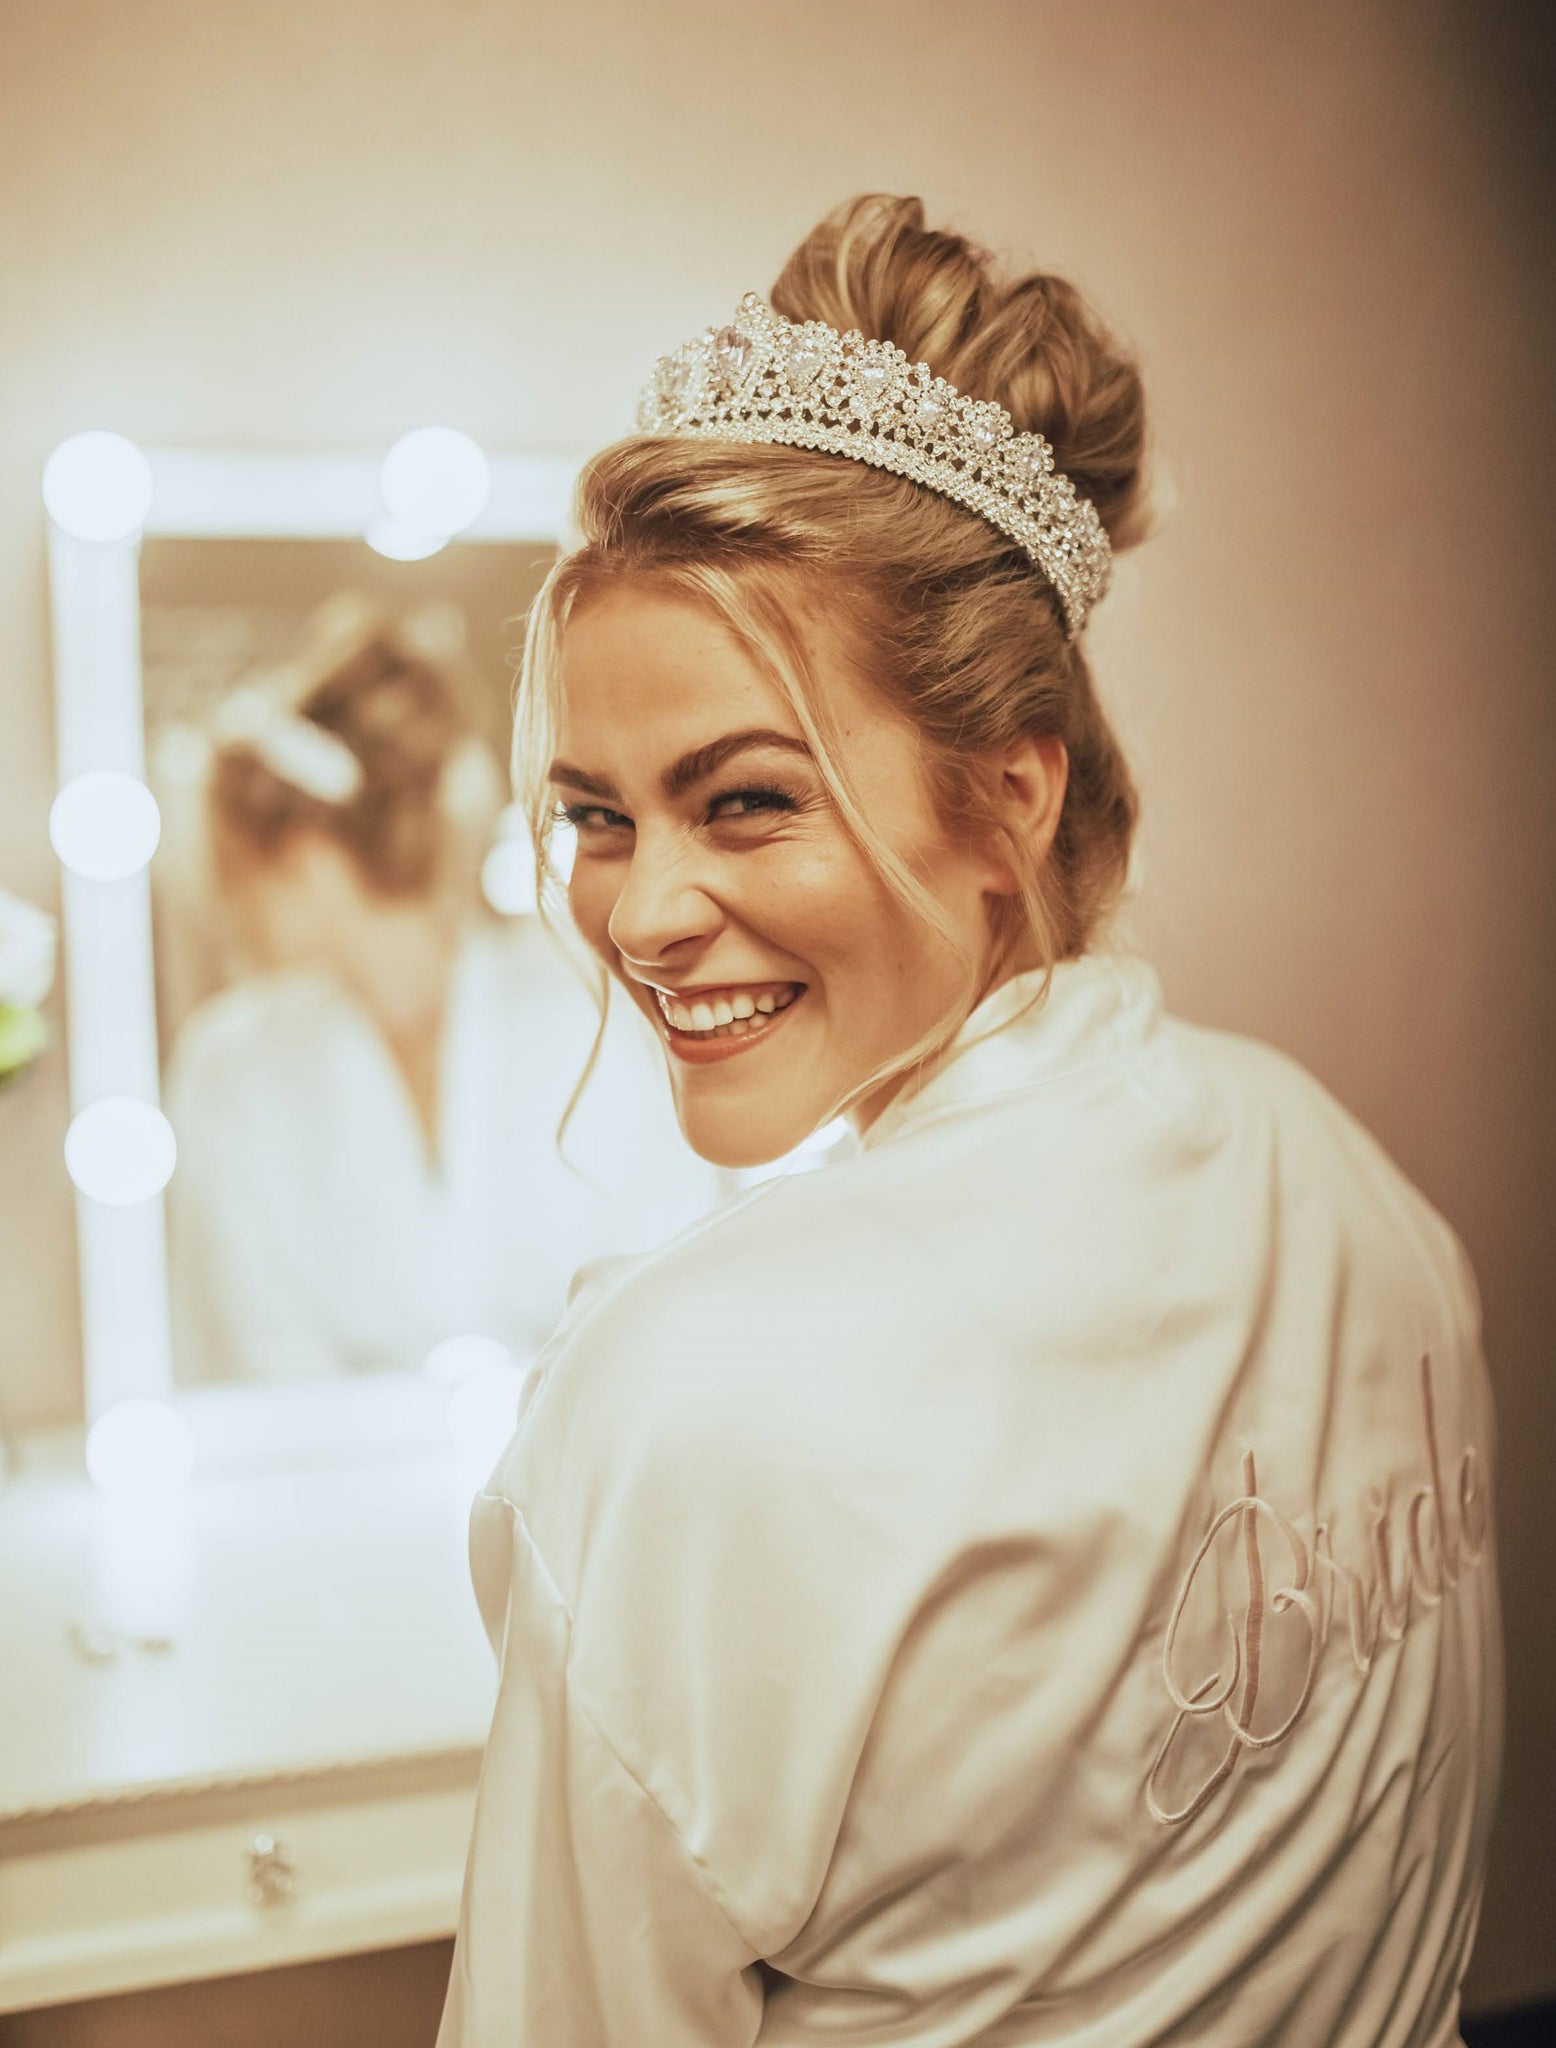 Gorgeous Royal Crystal Zircon Bridal Full Circle Tiara – La Bella Bridal  Accessories